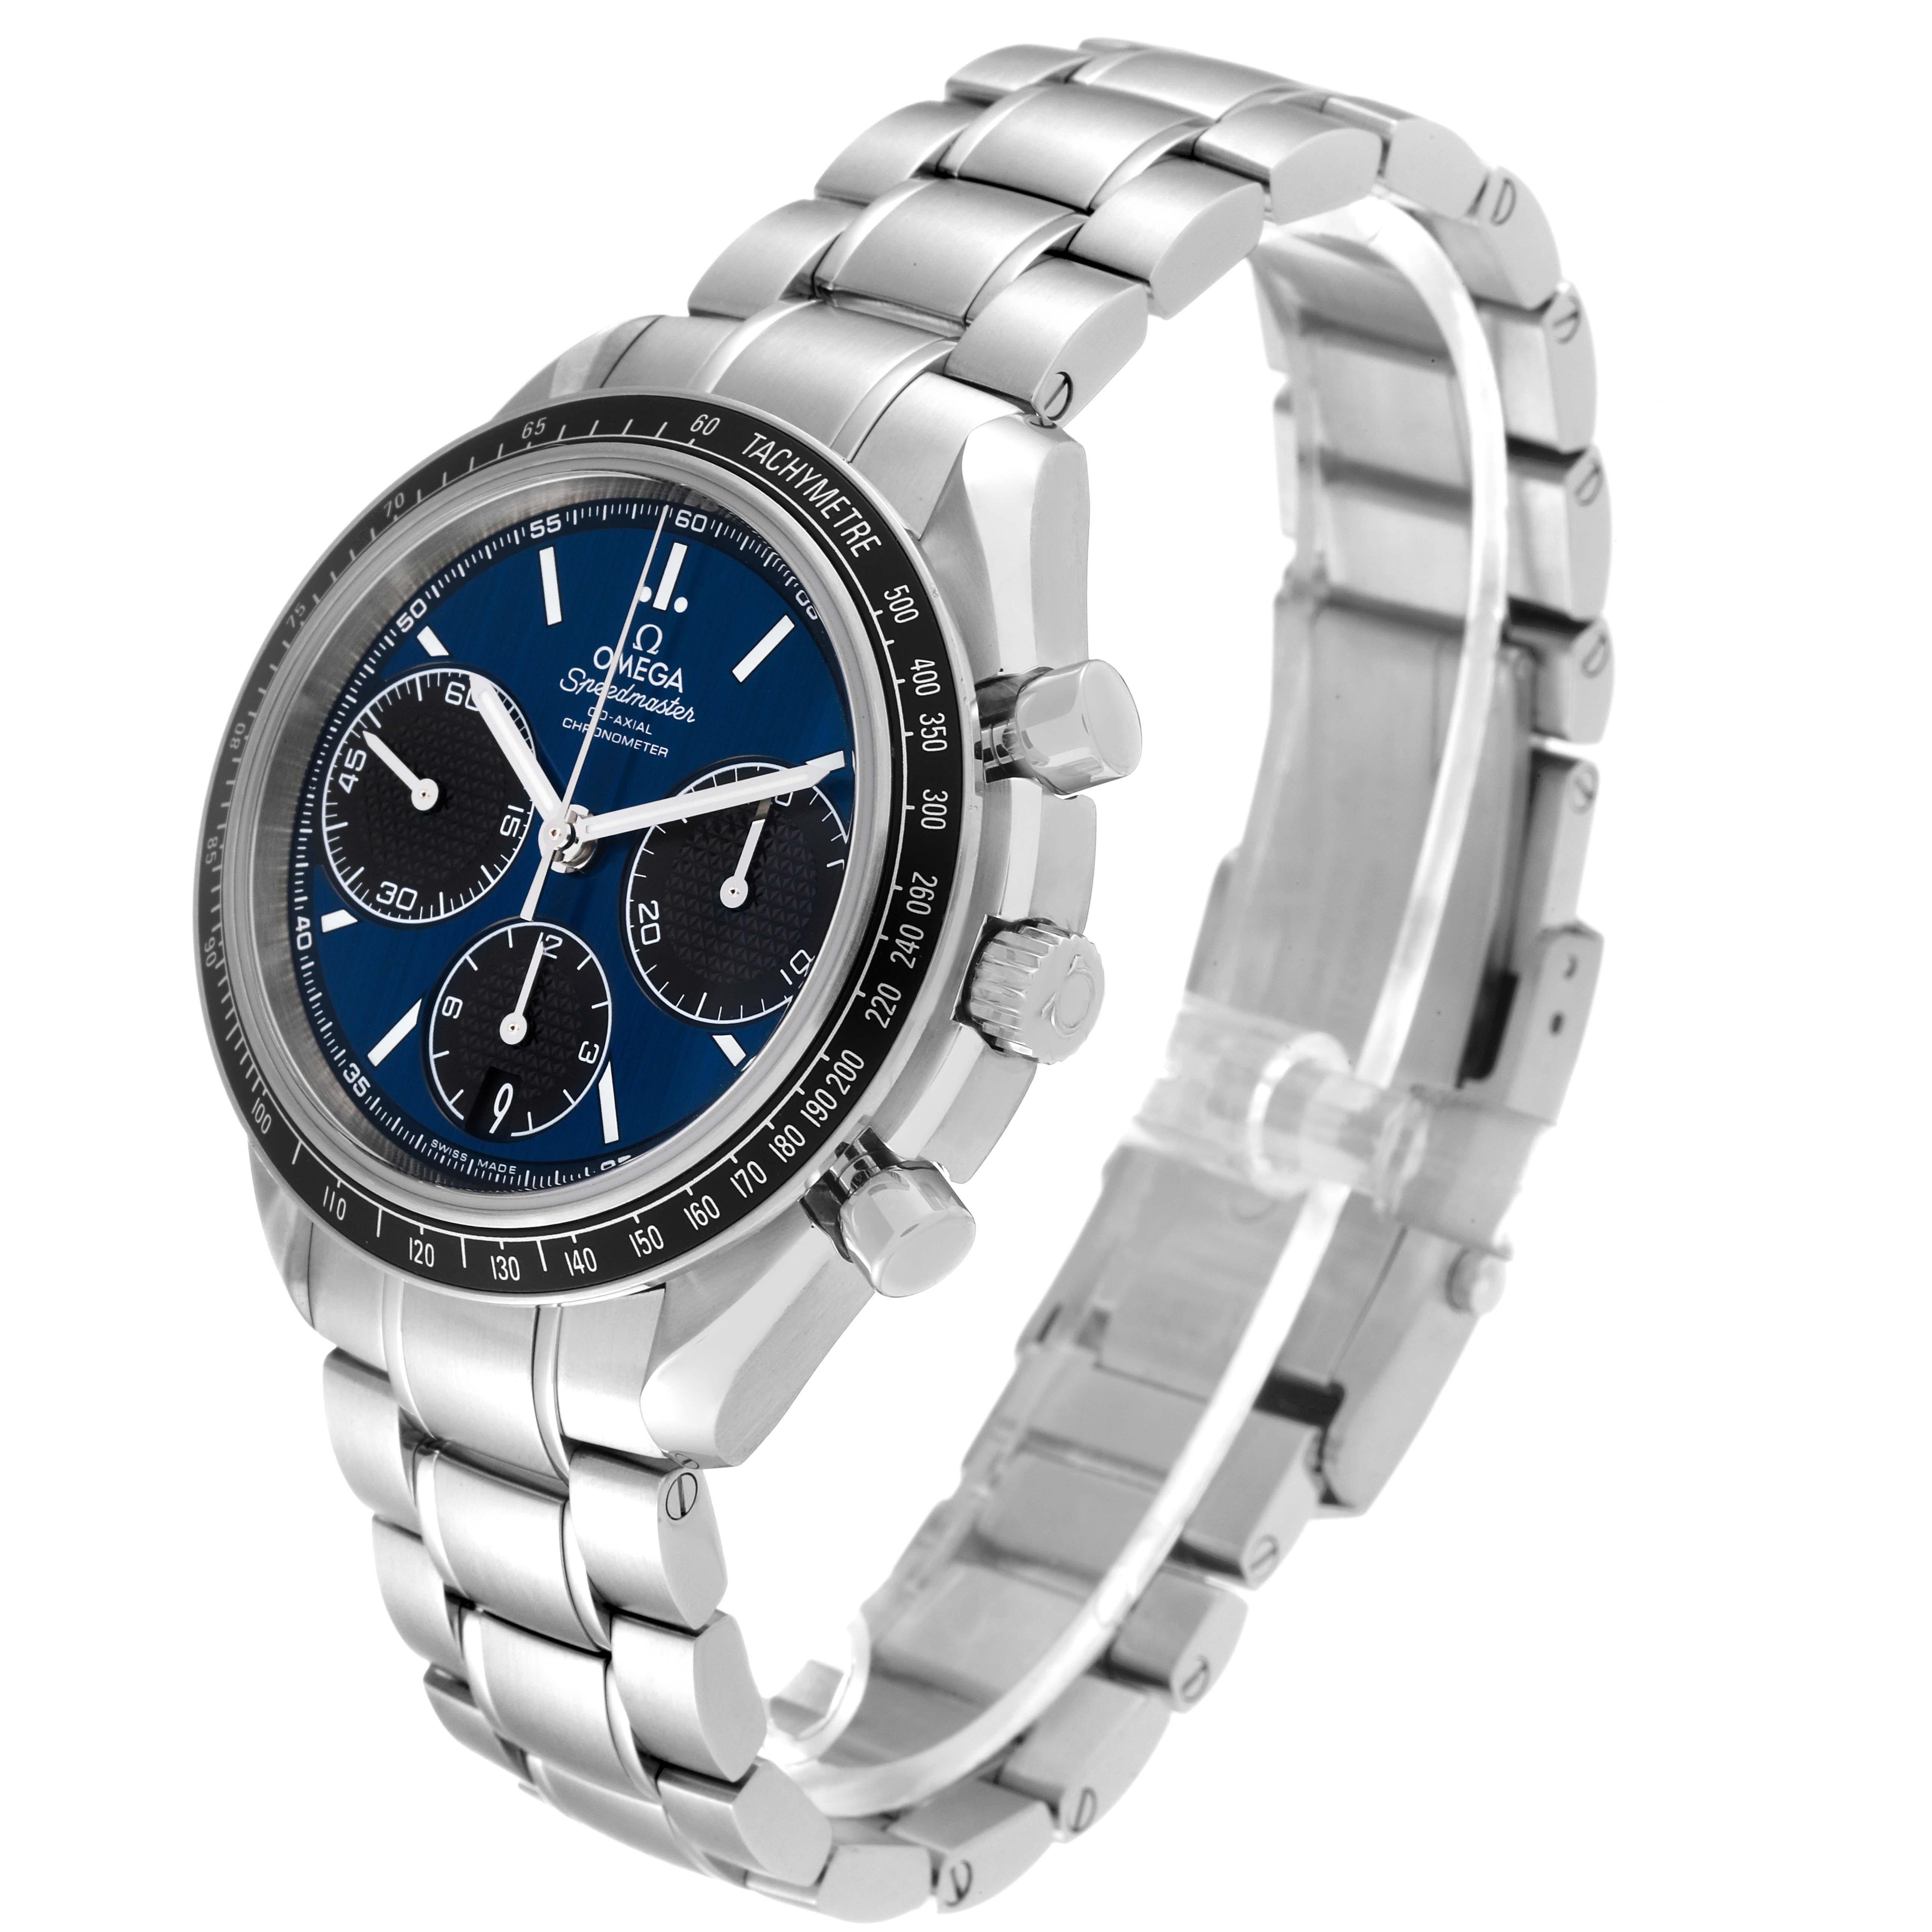 speedmaster racing automatic chronograph men's watch 32630405002001